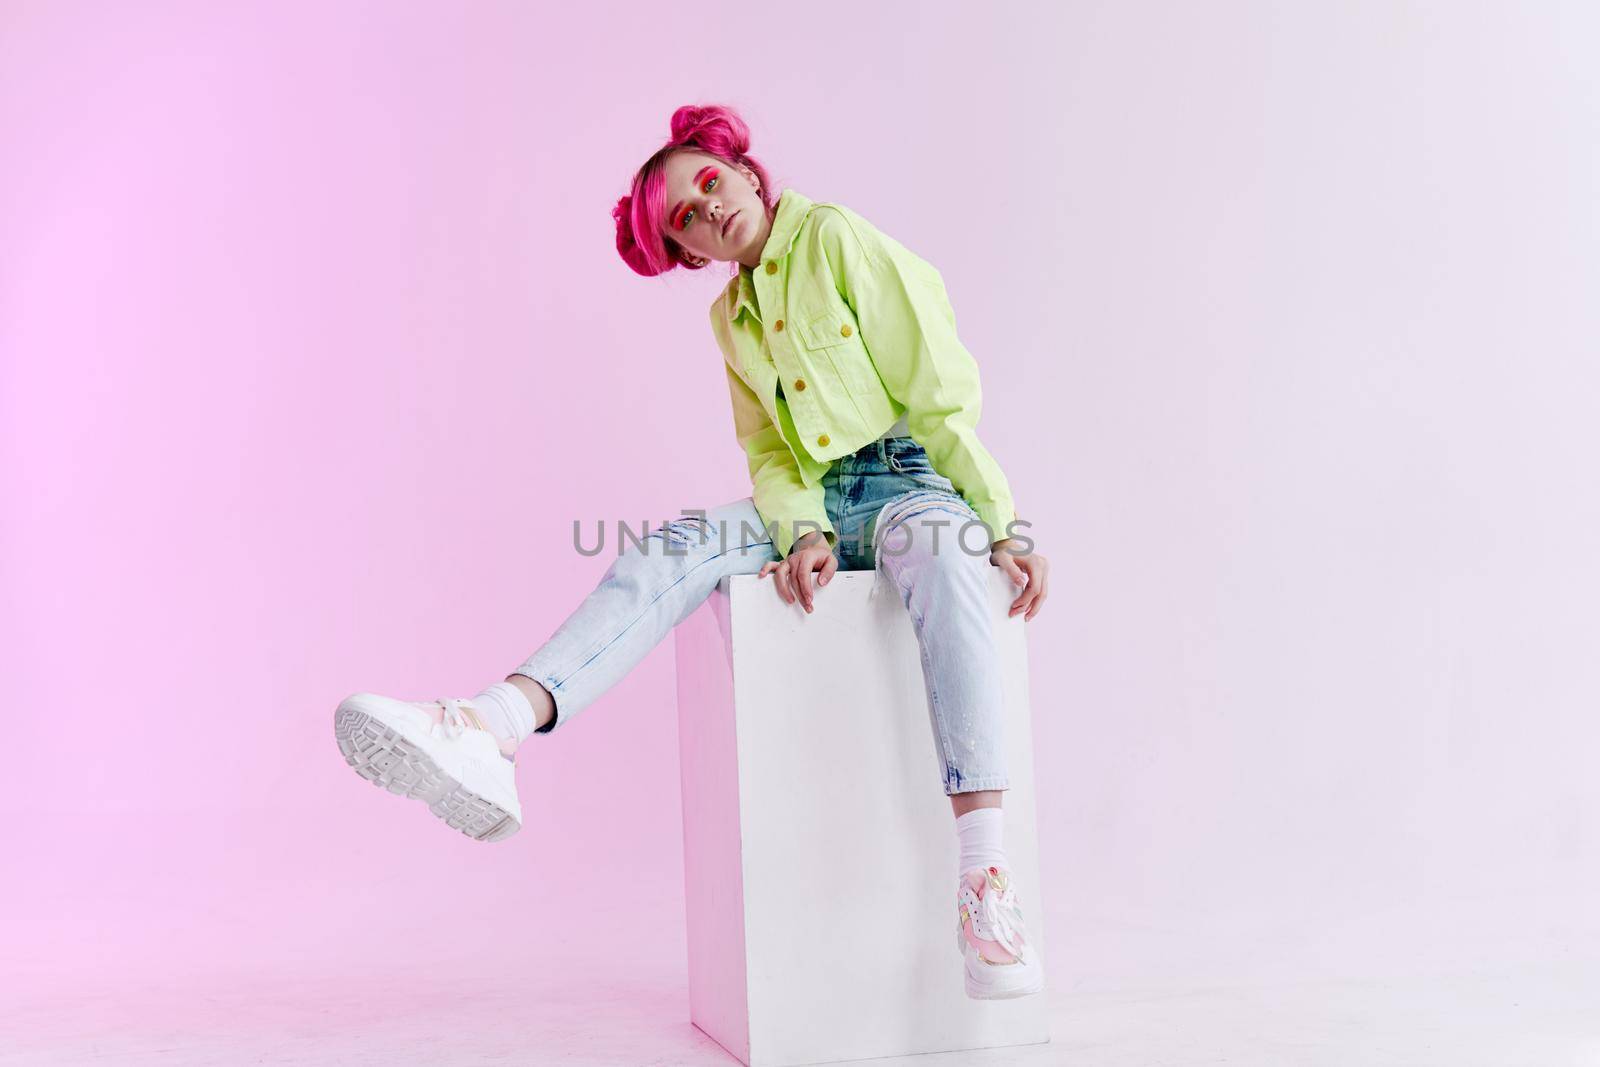 girl with pink hair teen posing fashion neon. High quality photo